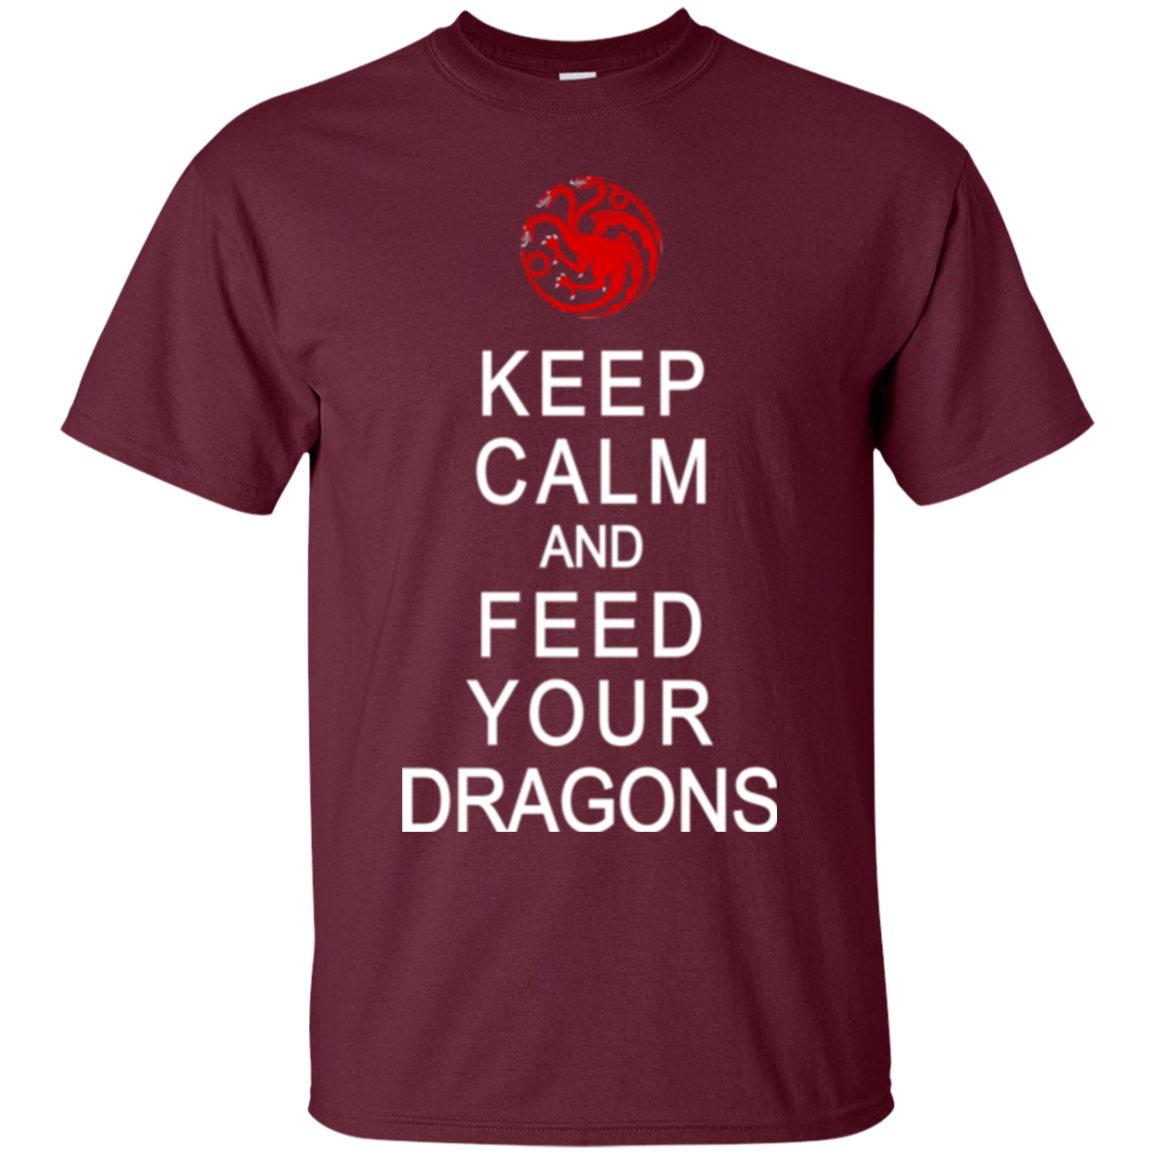 Feed dragons T-Shirt